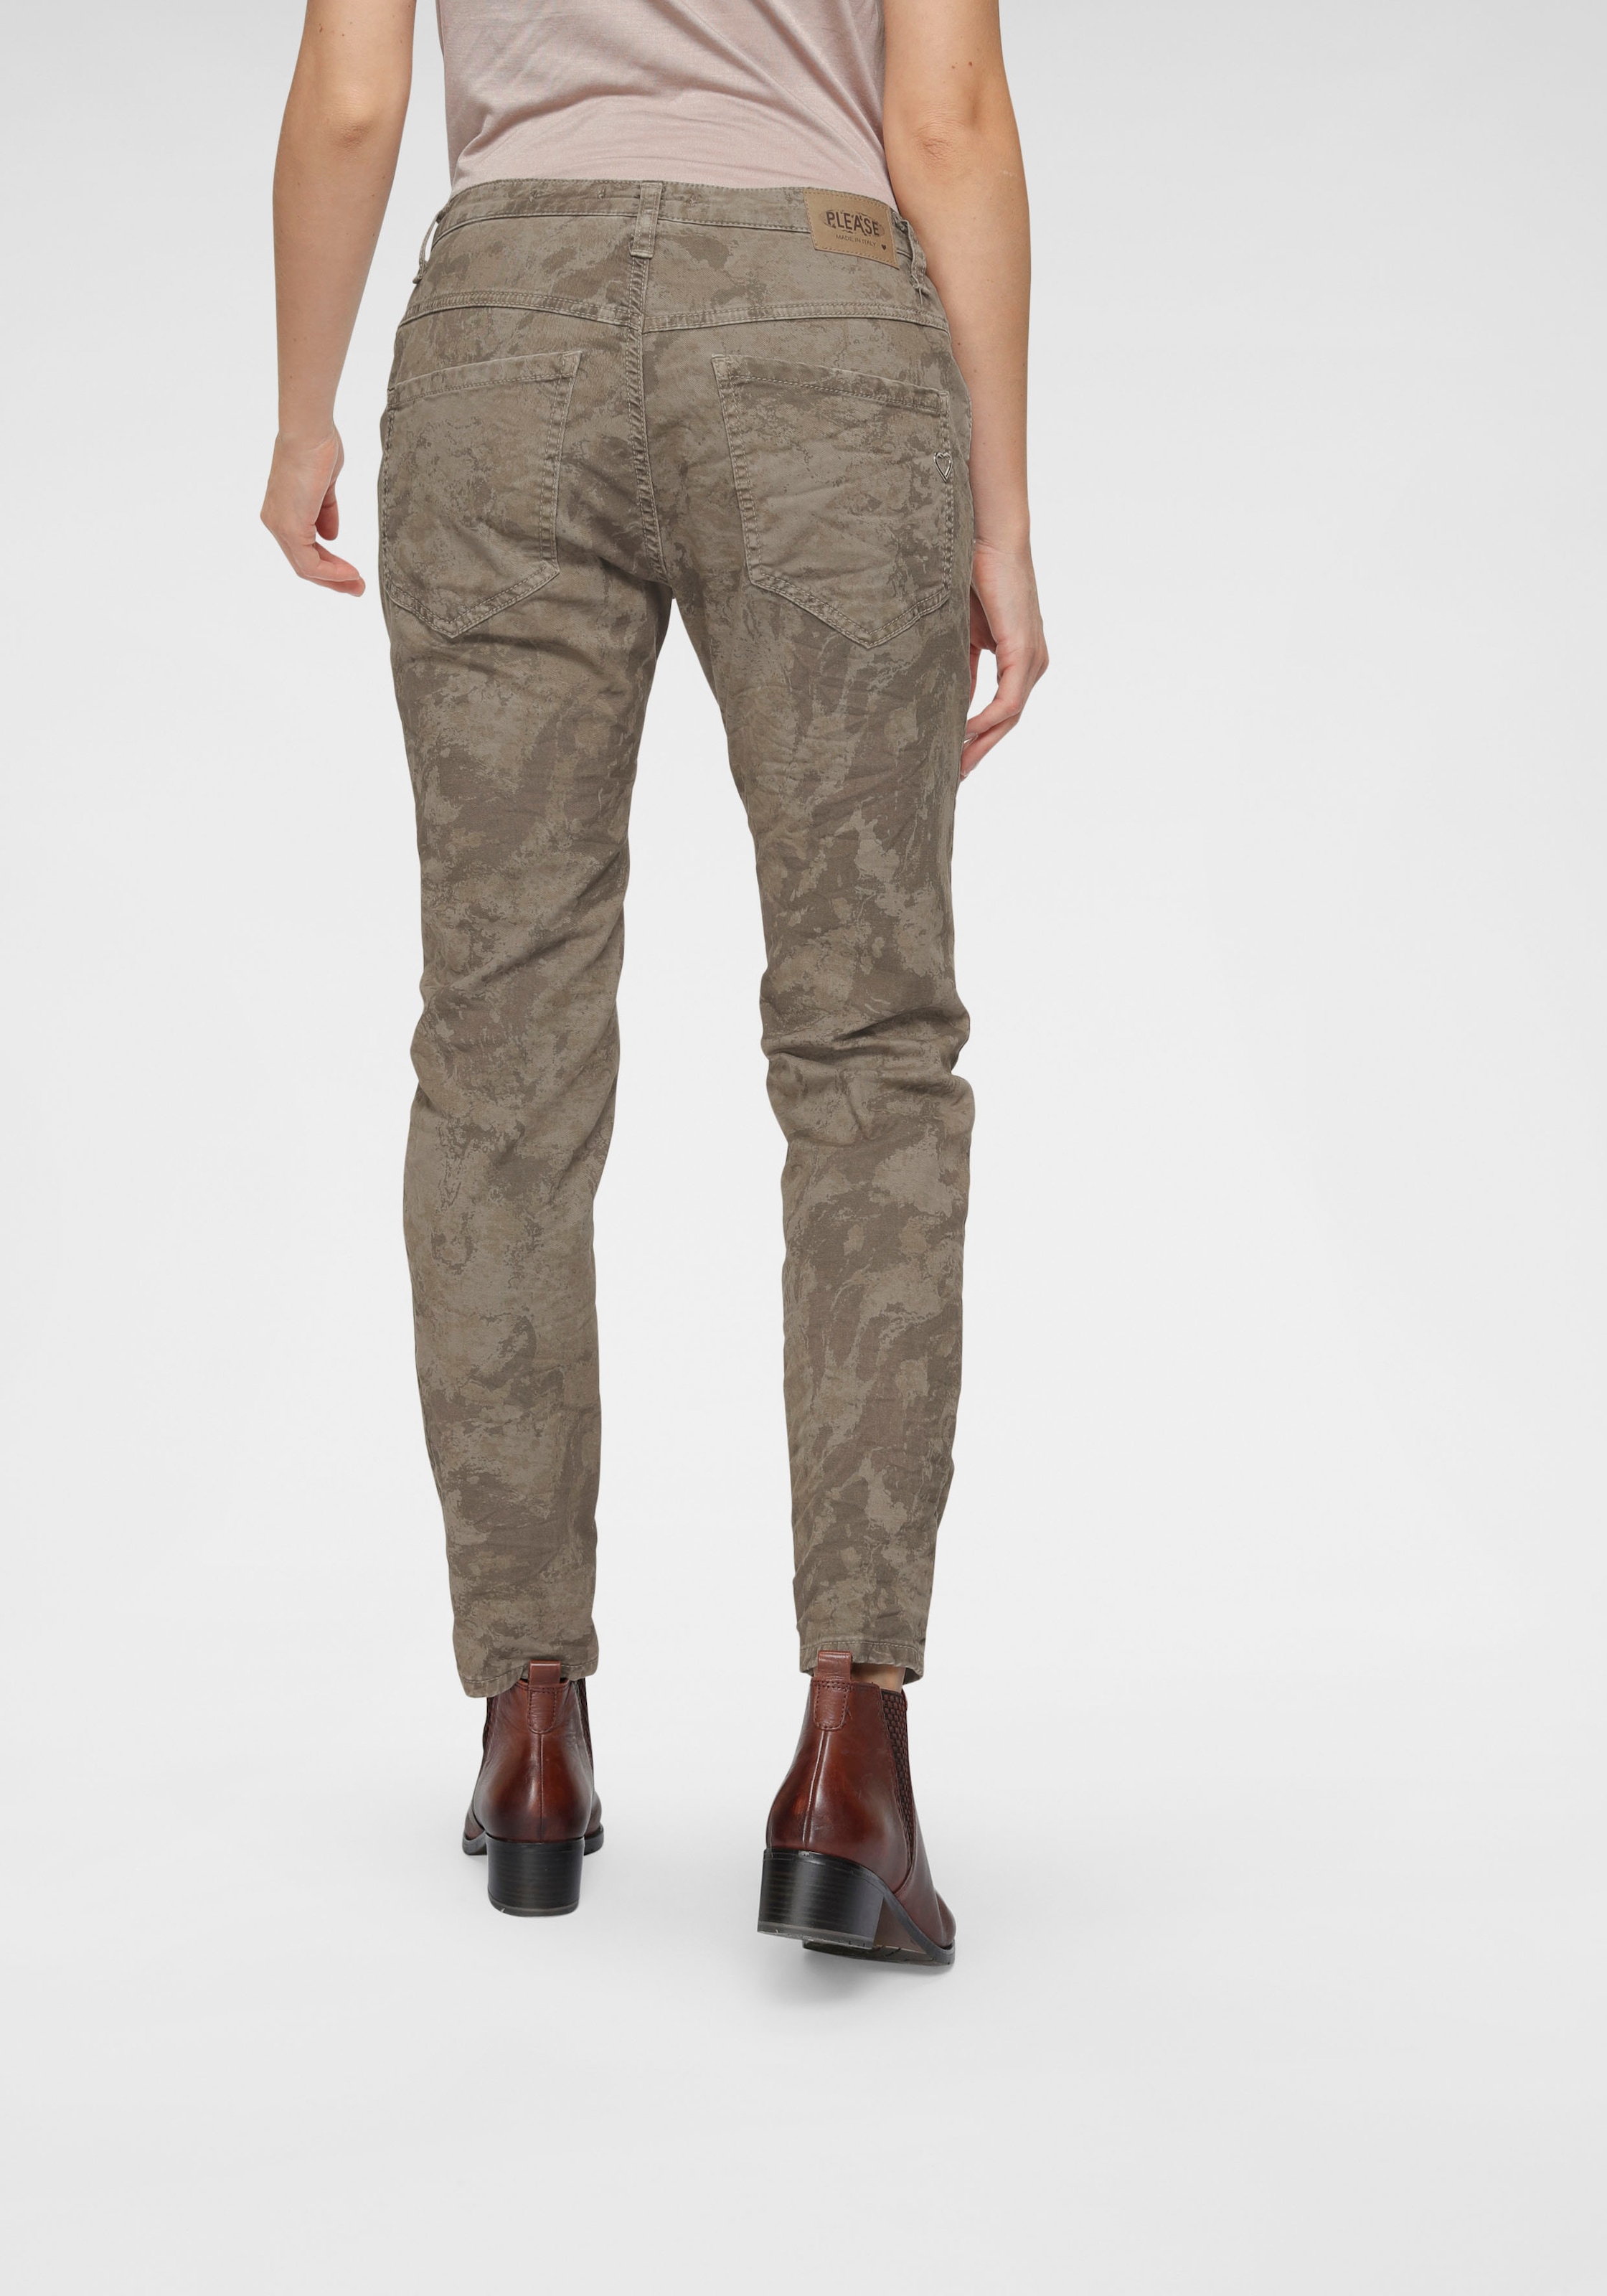 Please Jeans Röhrenhose im Style kaufen »P78«, Military günstig